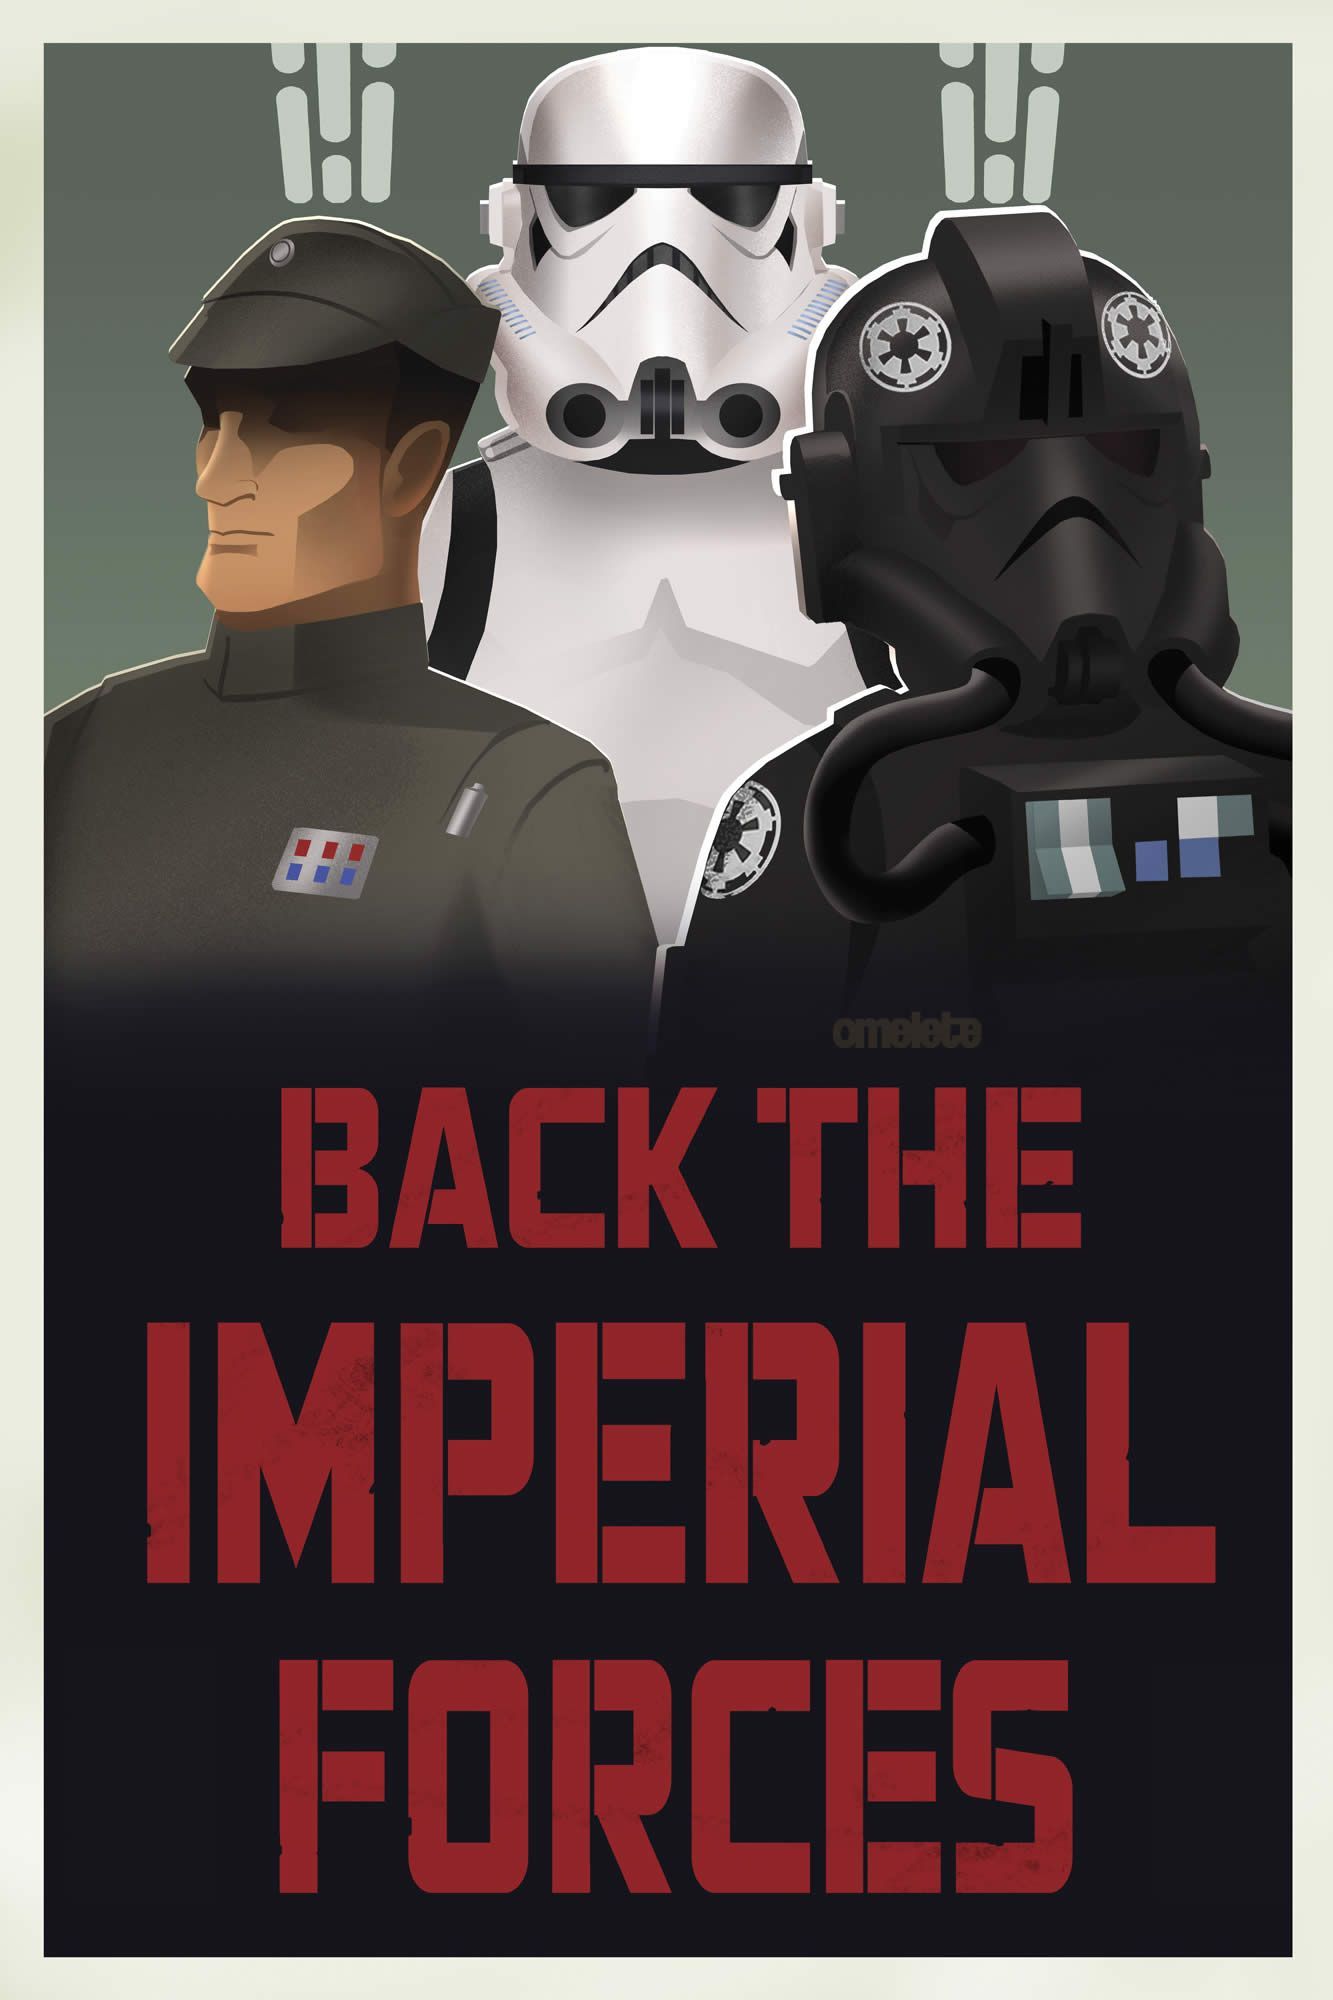 6 Imperial Star Wars Rebels Propaganda Posters